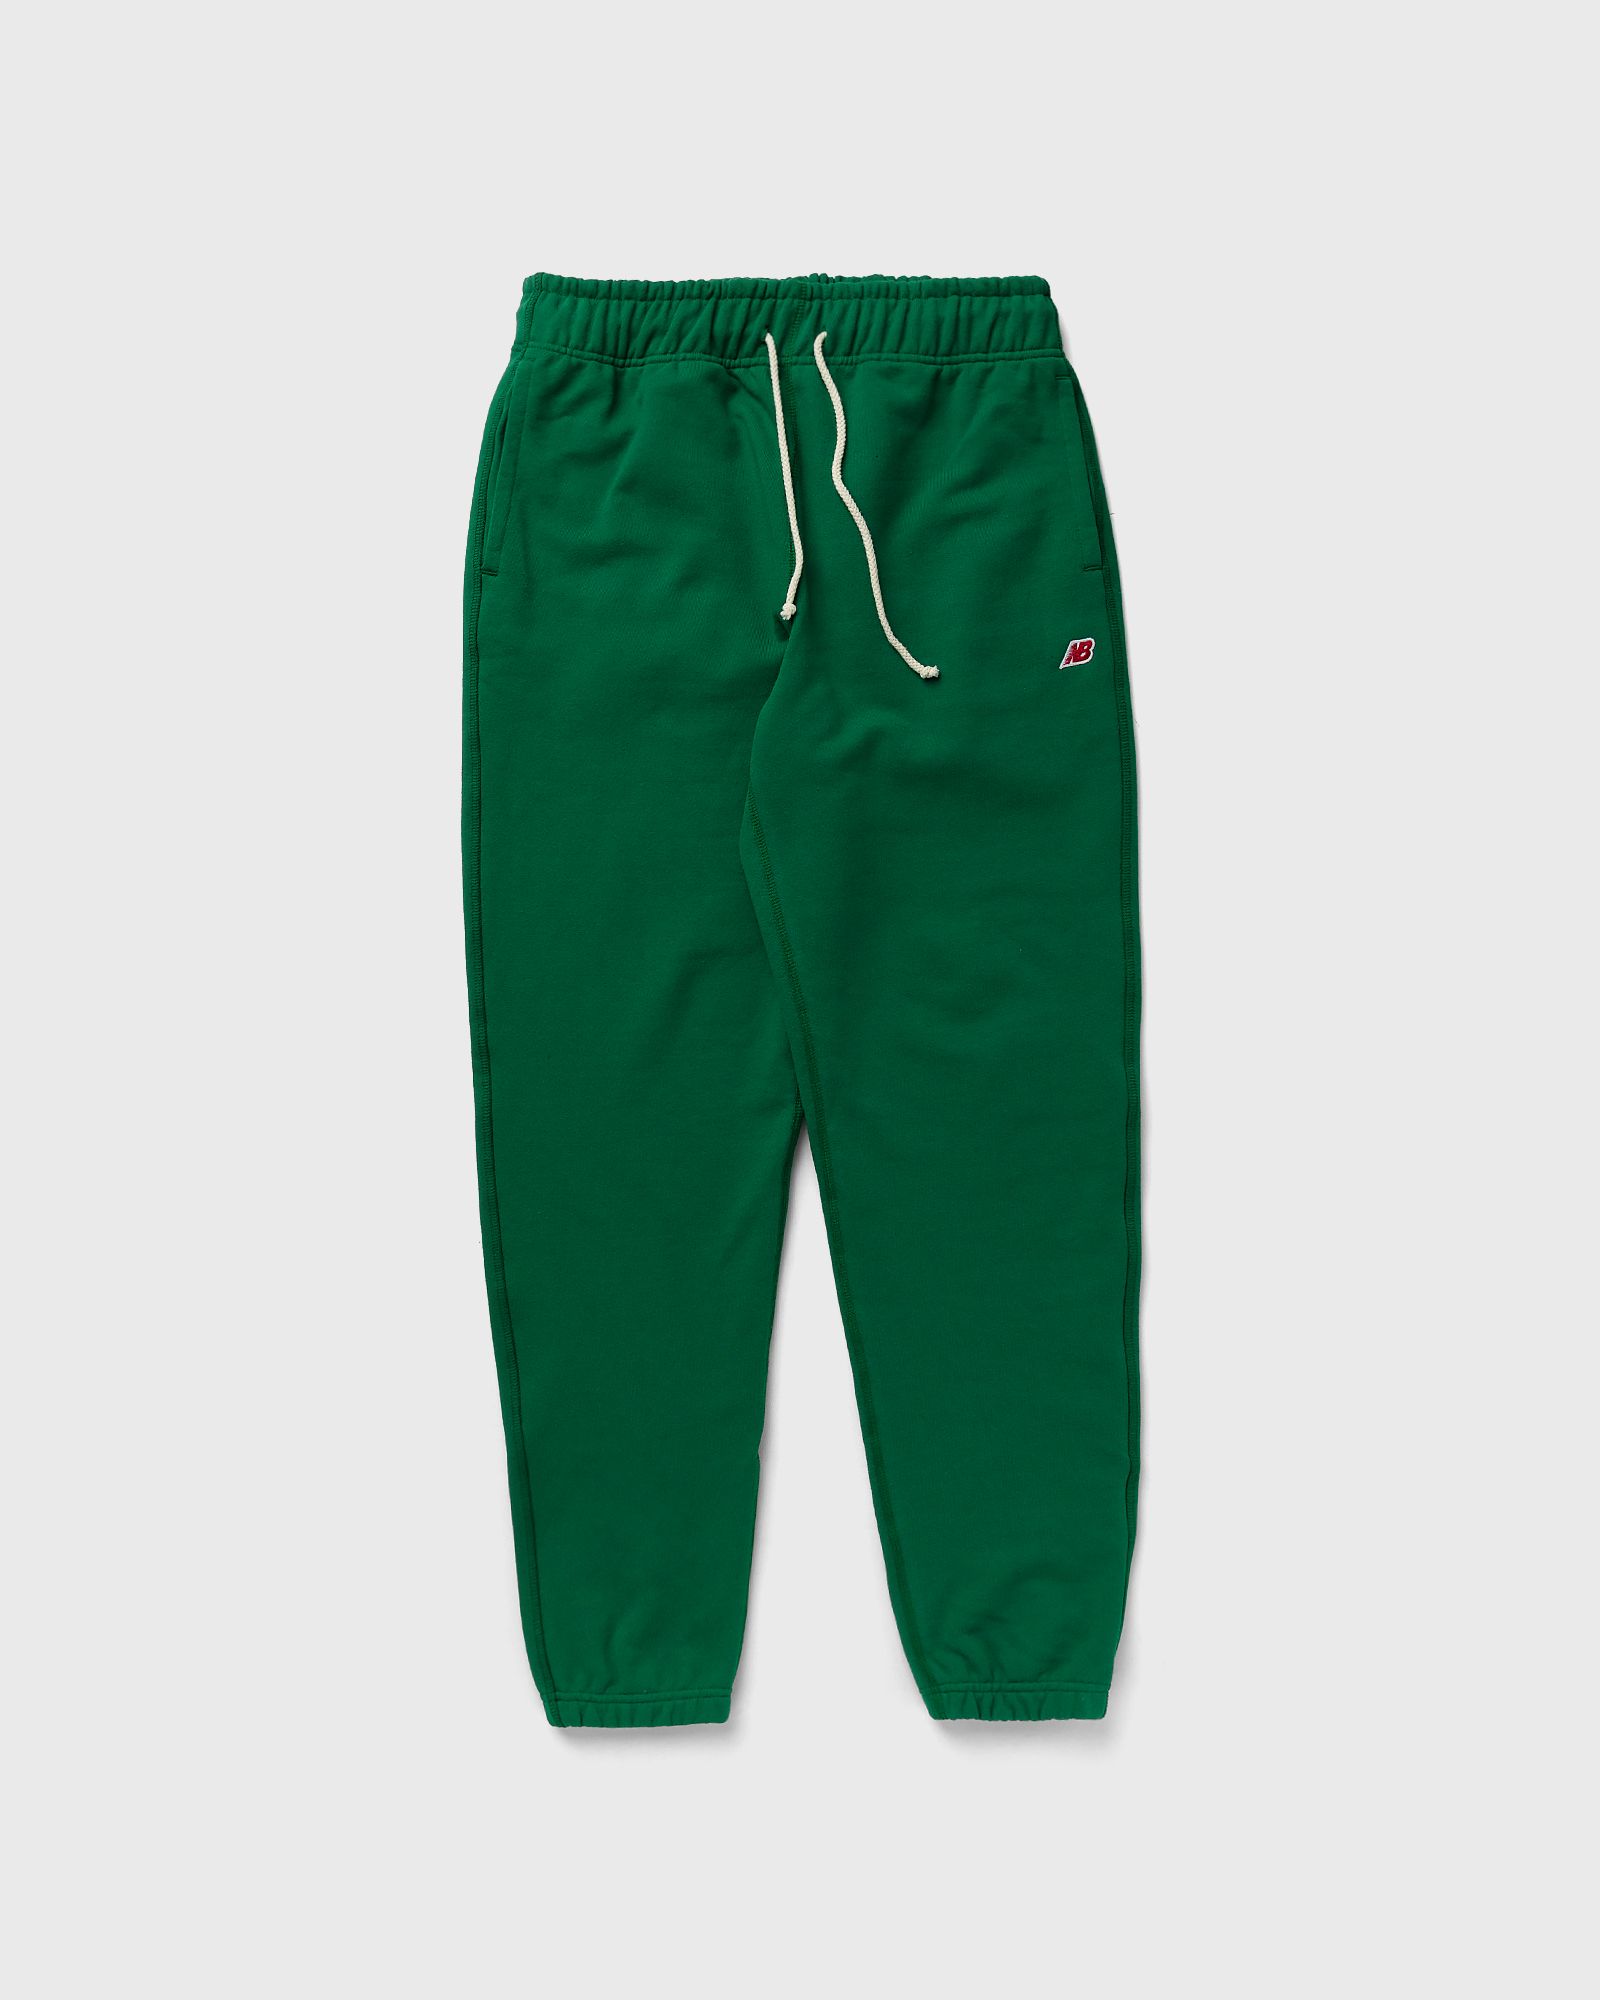 New Balance - made in usa core sweatpant men sweatpants green in größe:xl